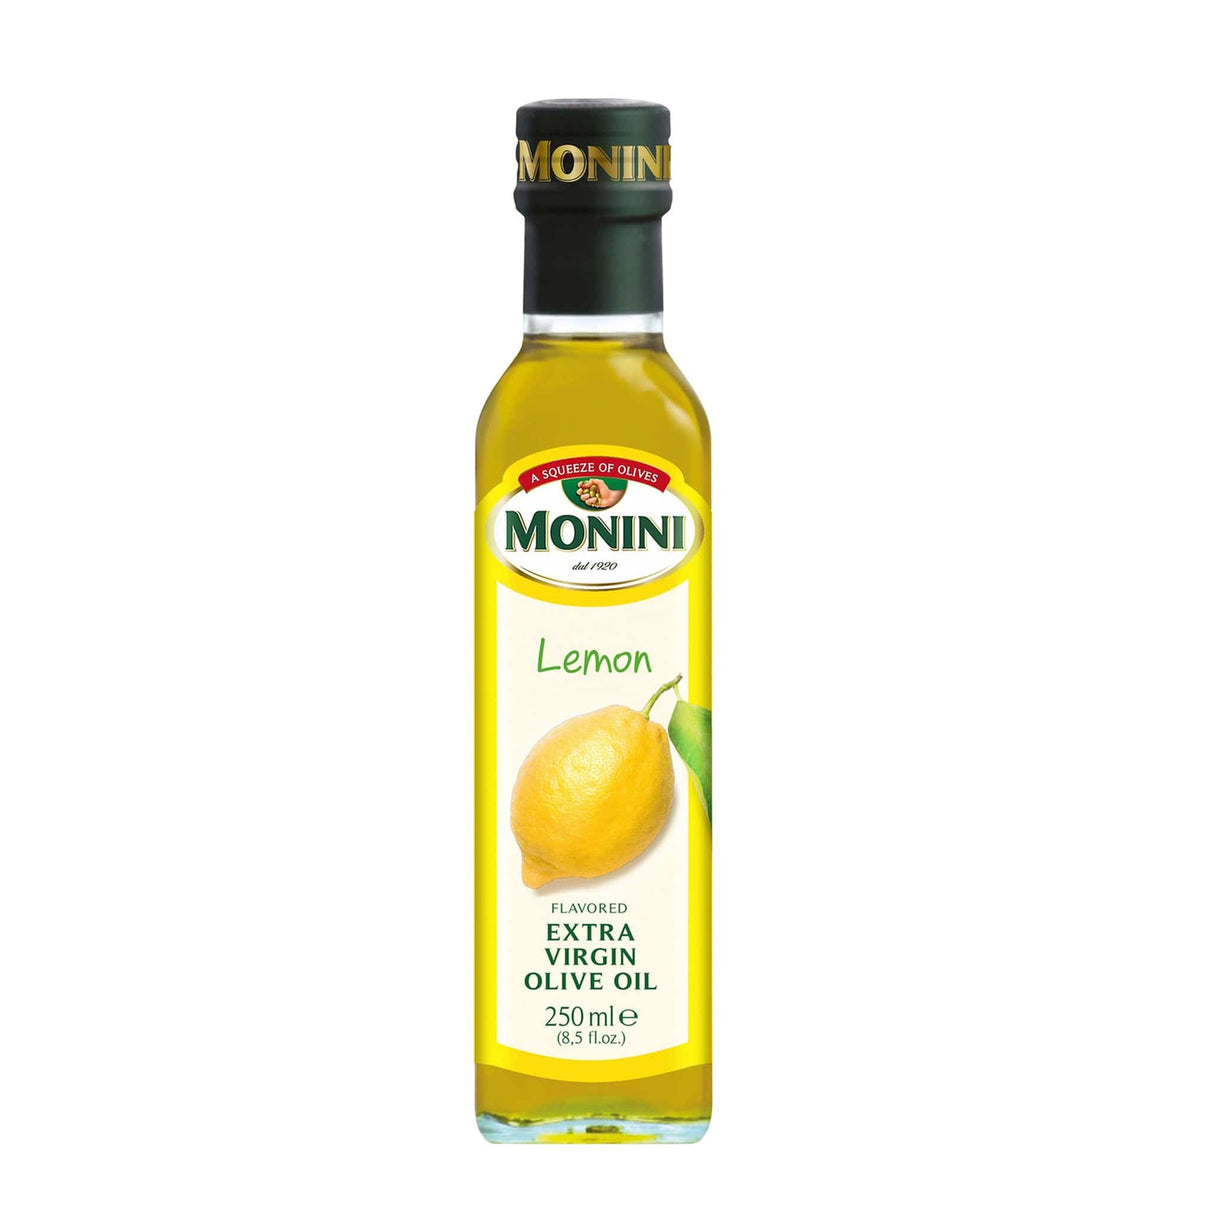 Monini Lemon Flavored Extra Virgin Olive Oil